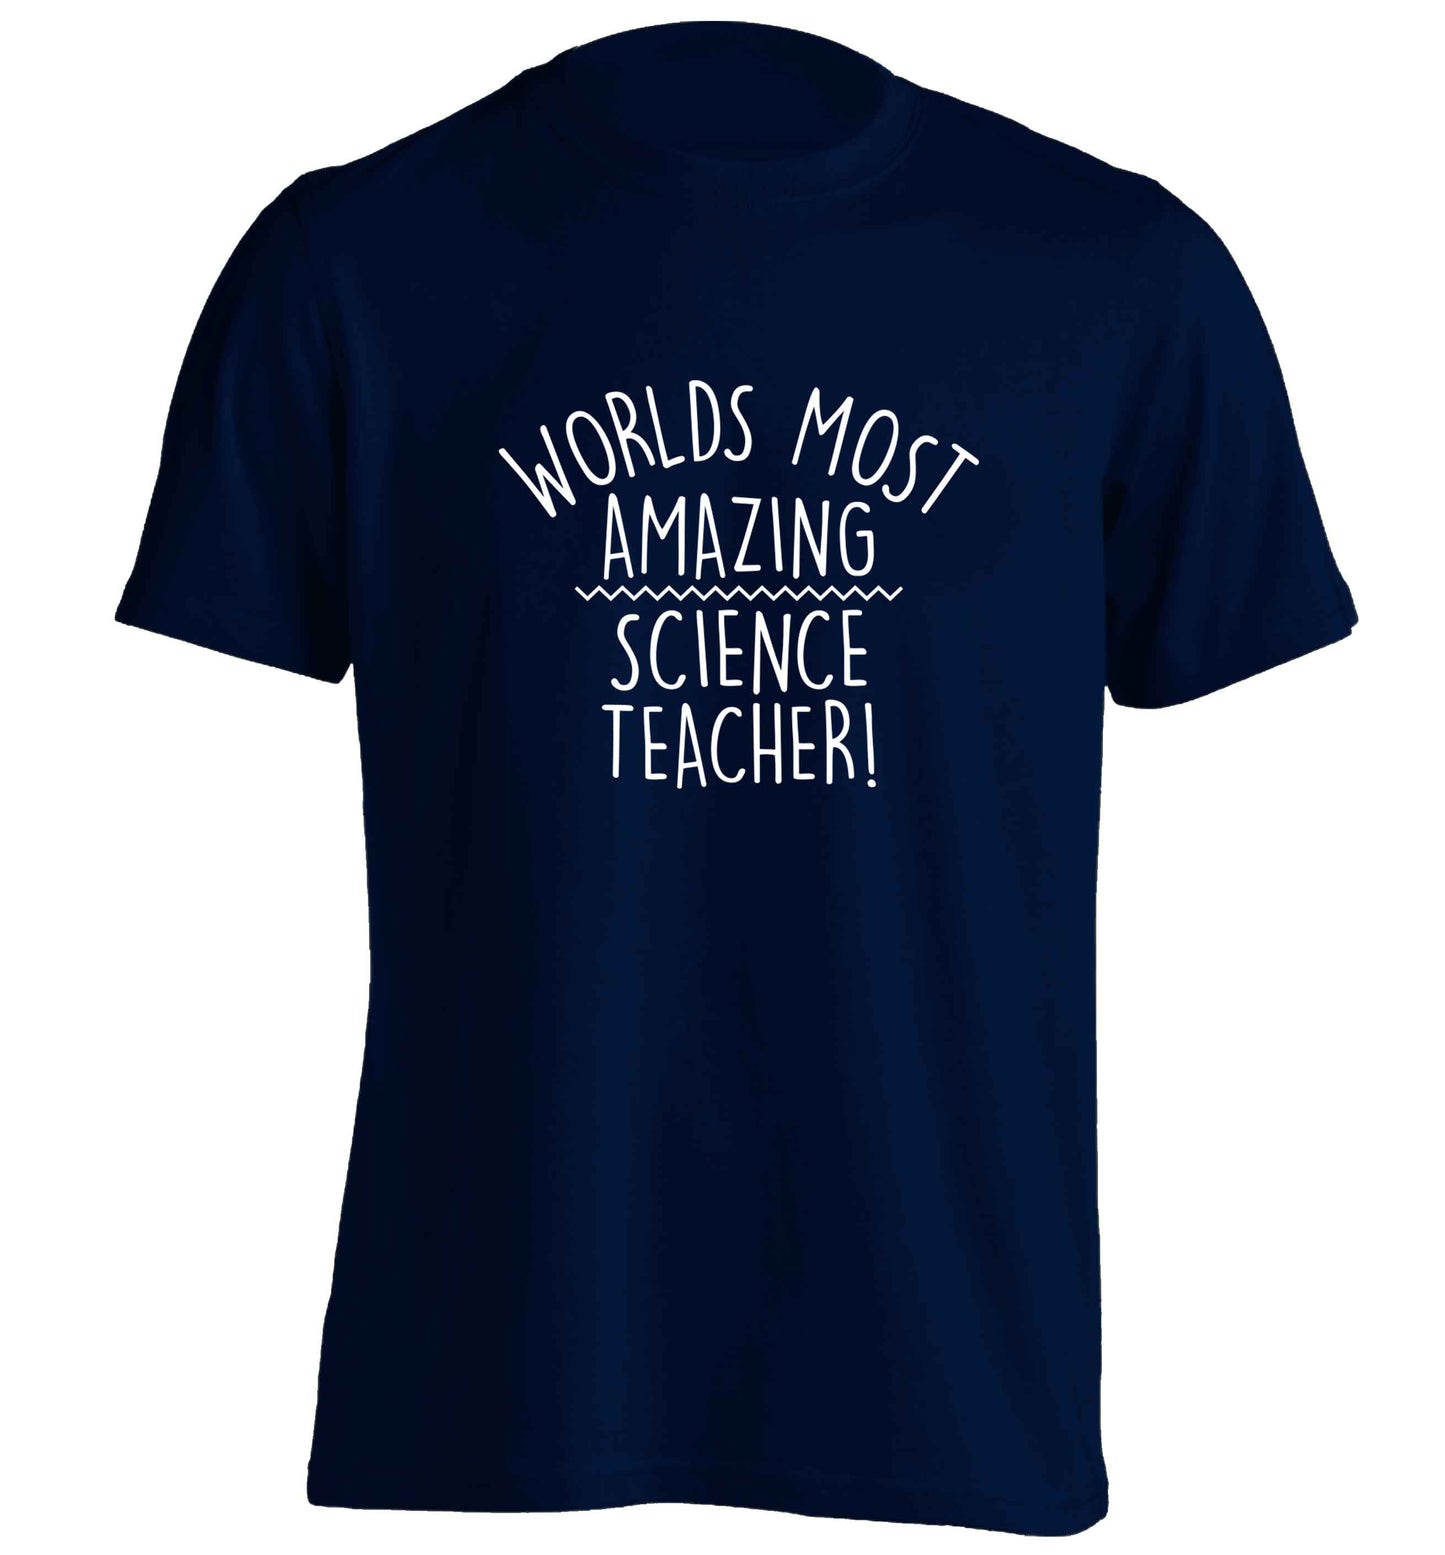 Worlds most amazing science teacher adults unisex navy Tshirt 2XL